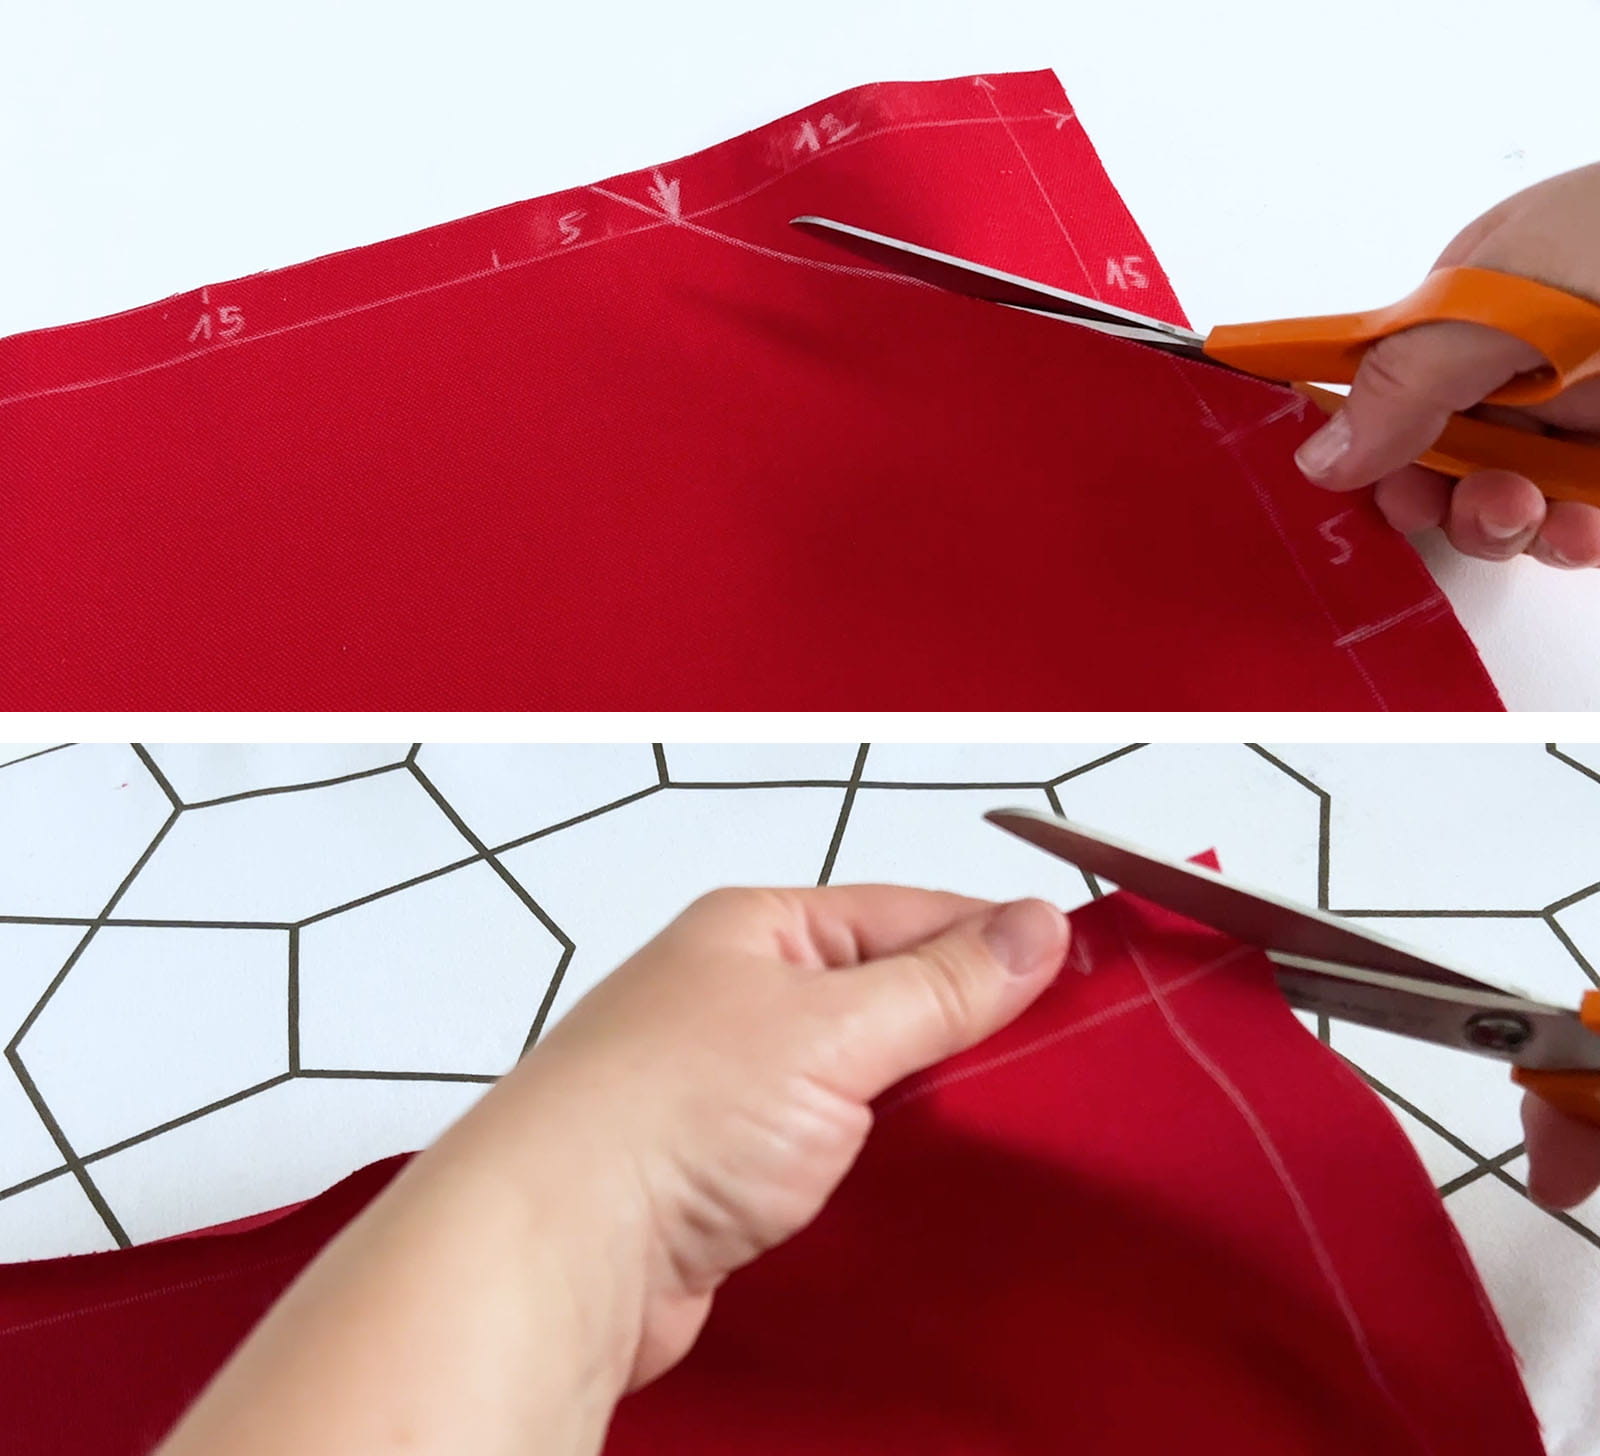 Cutting corners off red fabric